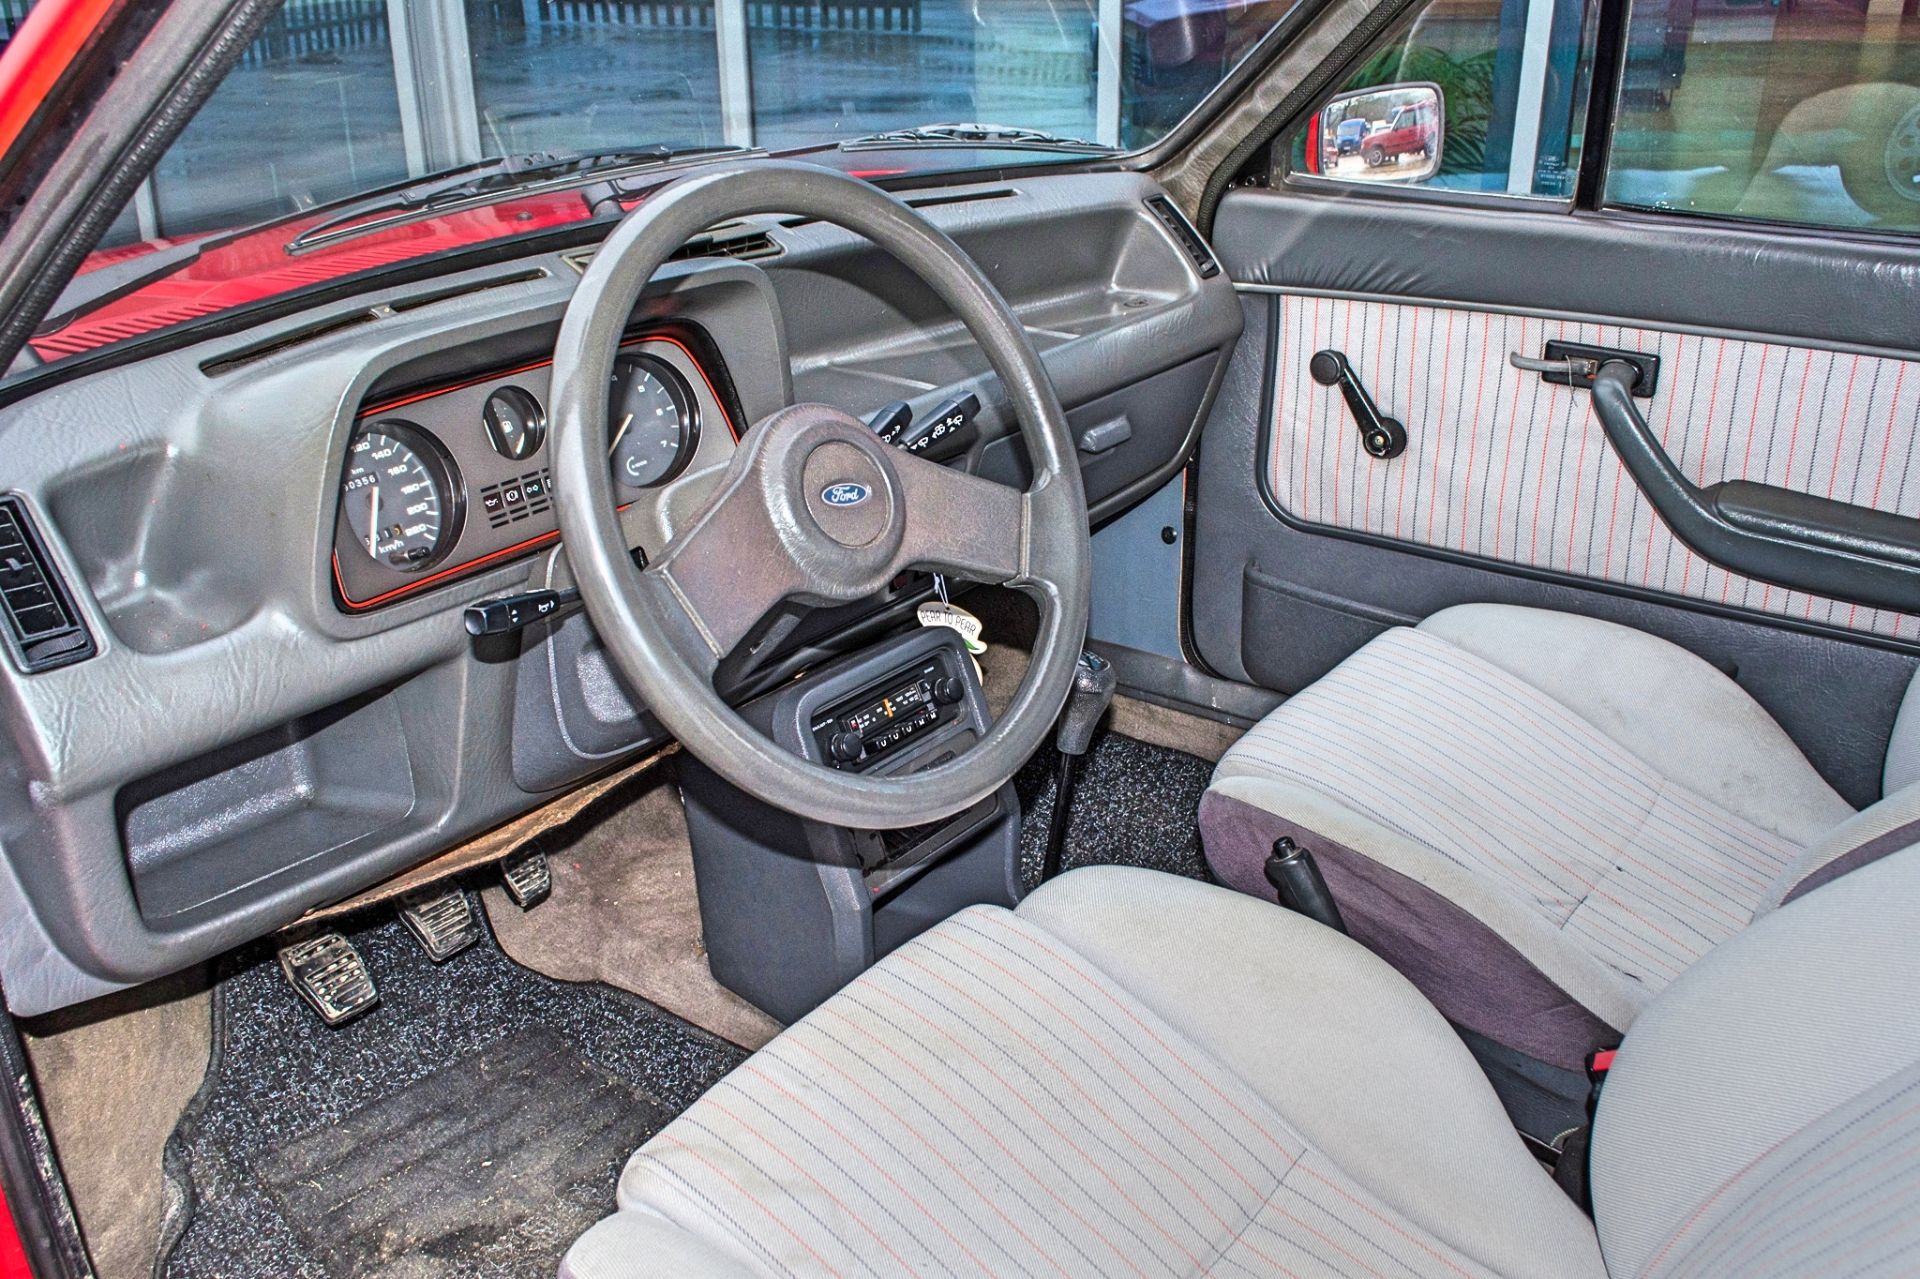 1983 Ford Fiesta XR2 1600cc 3 door hatchback - Image 25 of 47